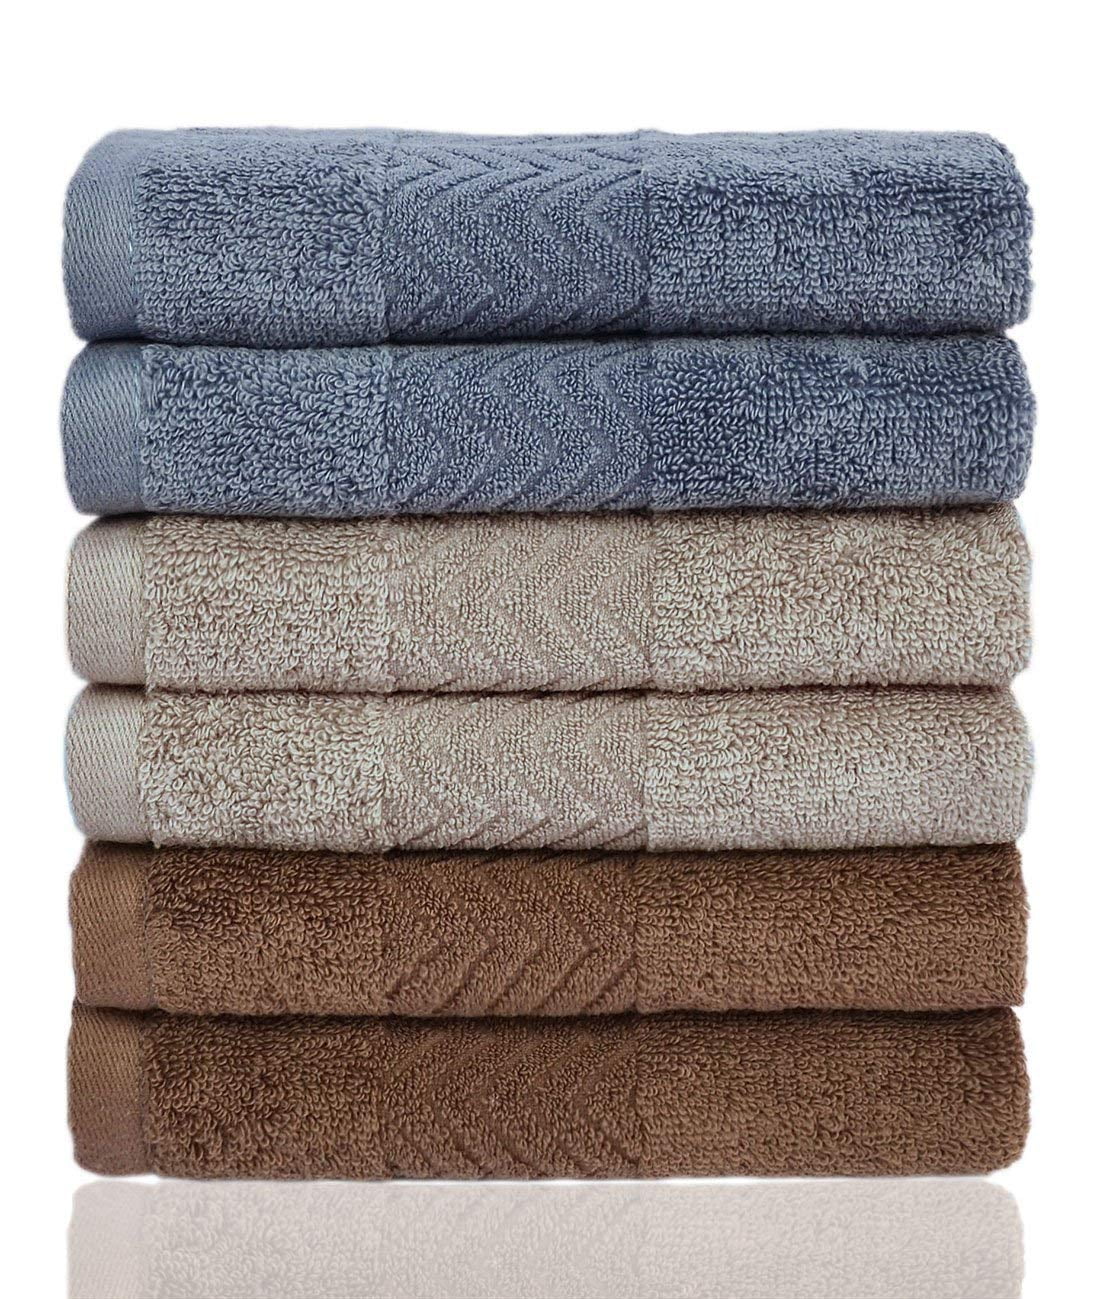 13 x 13 Inch 6-Pack 3 Colors Cleanbear Cotton Washcloths Bath Wash Cloth Set